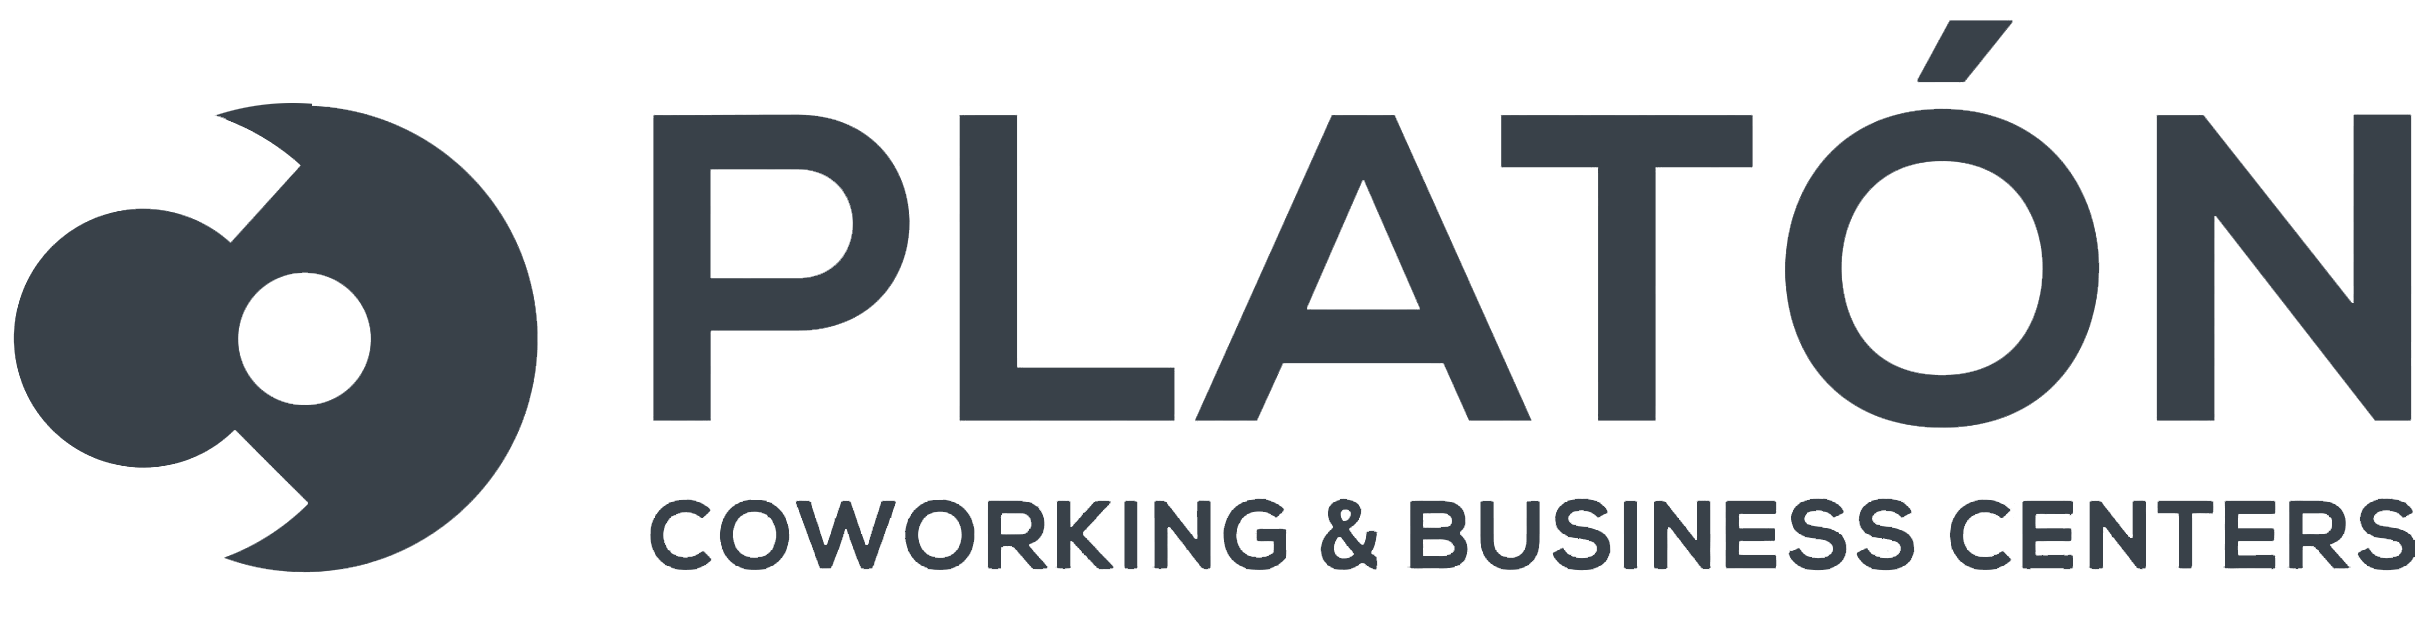 coworking platon logo